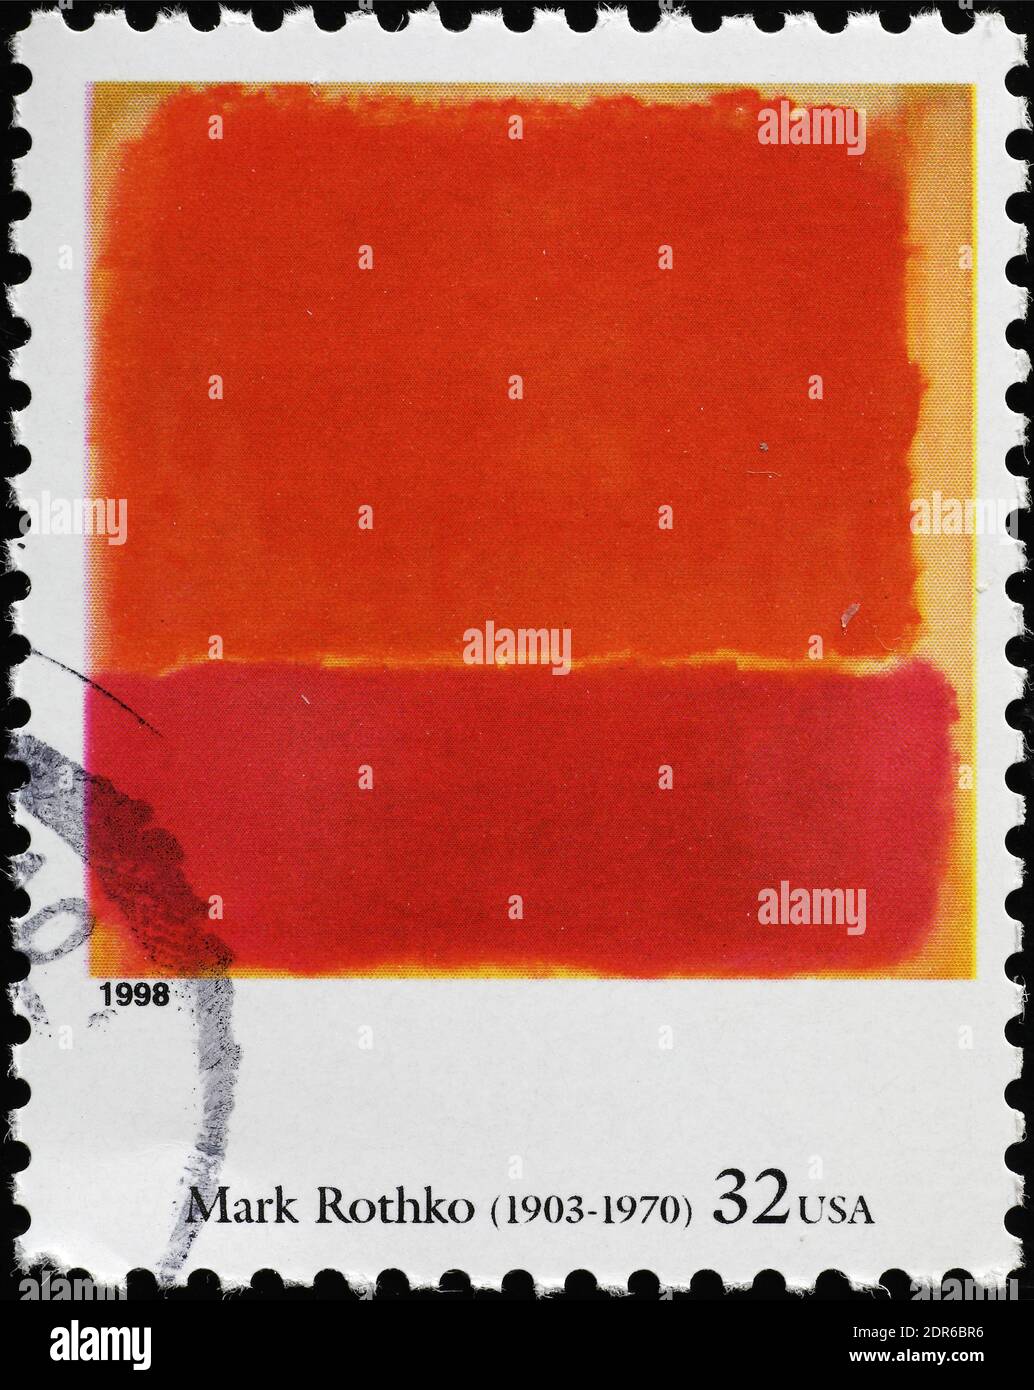 Pintura No12 de Mark Rothko en sello postal Foto de stock